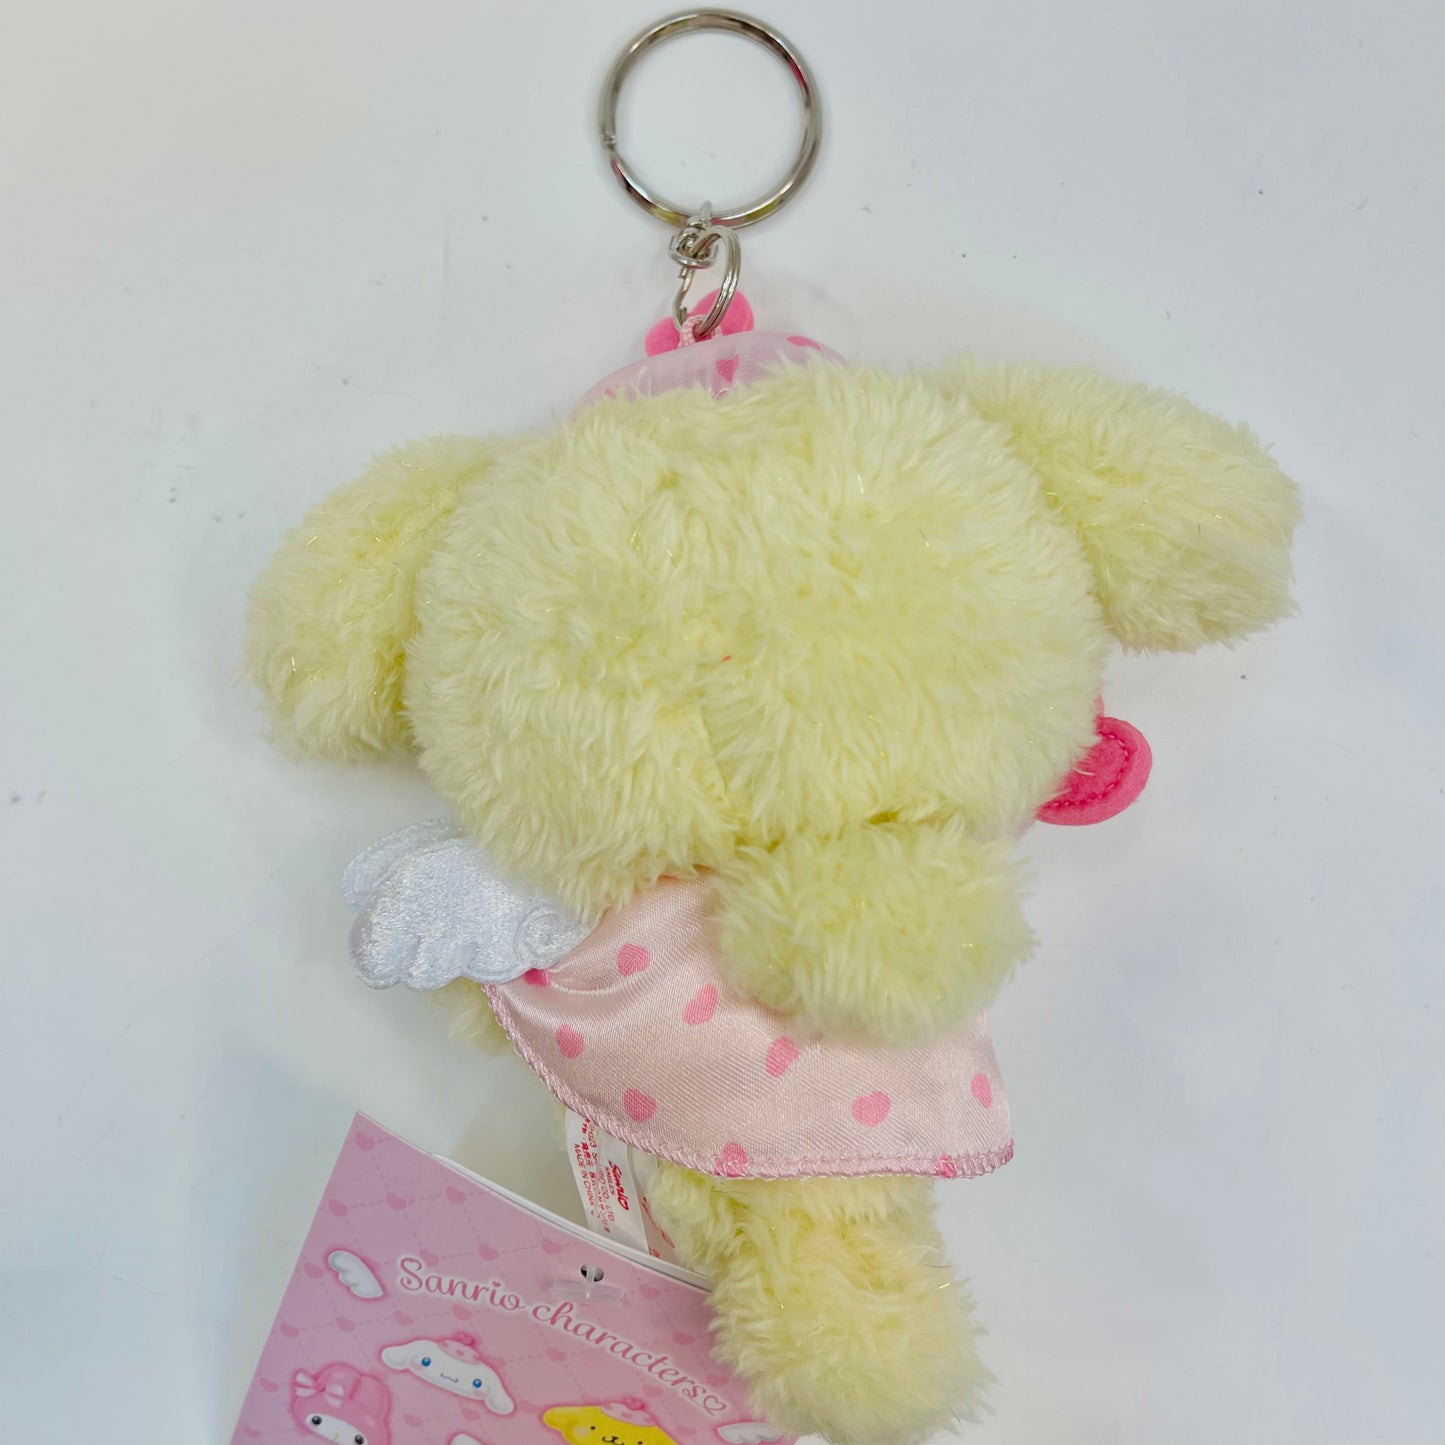 Sanrio DREAM Keychain with Mascot